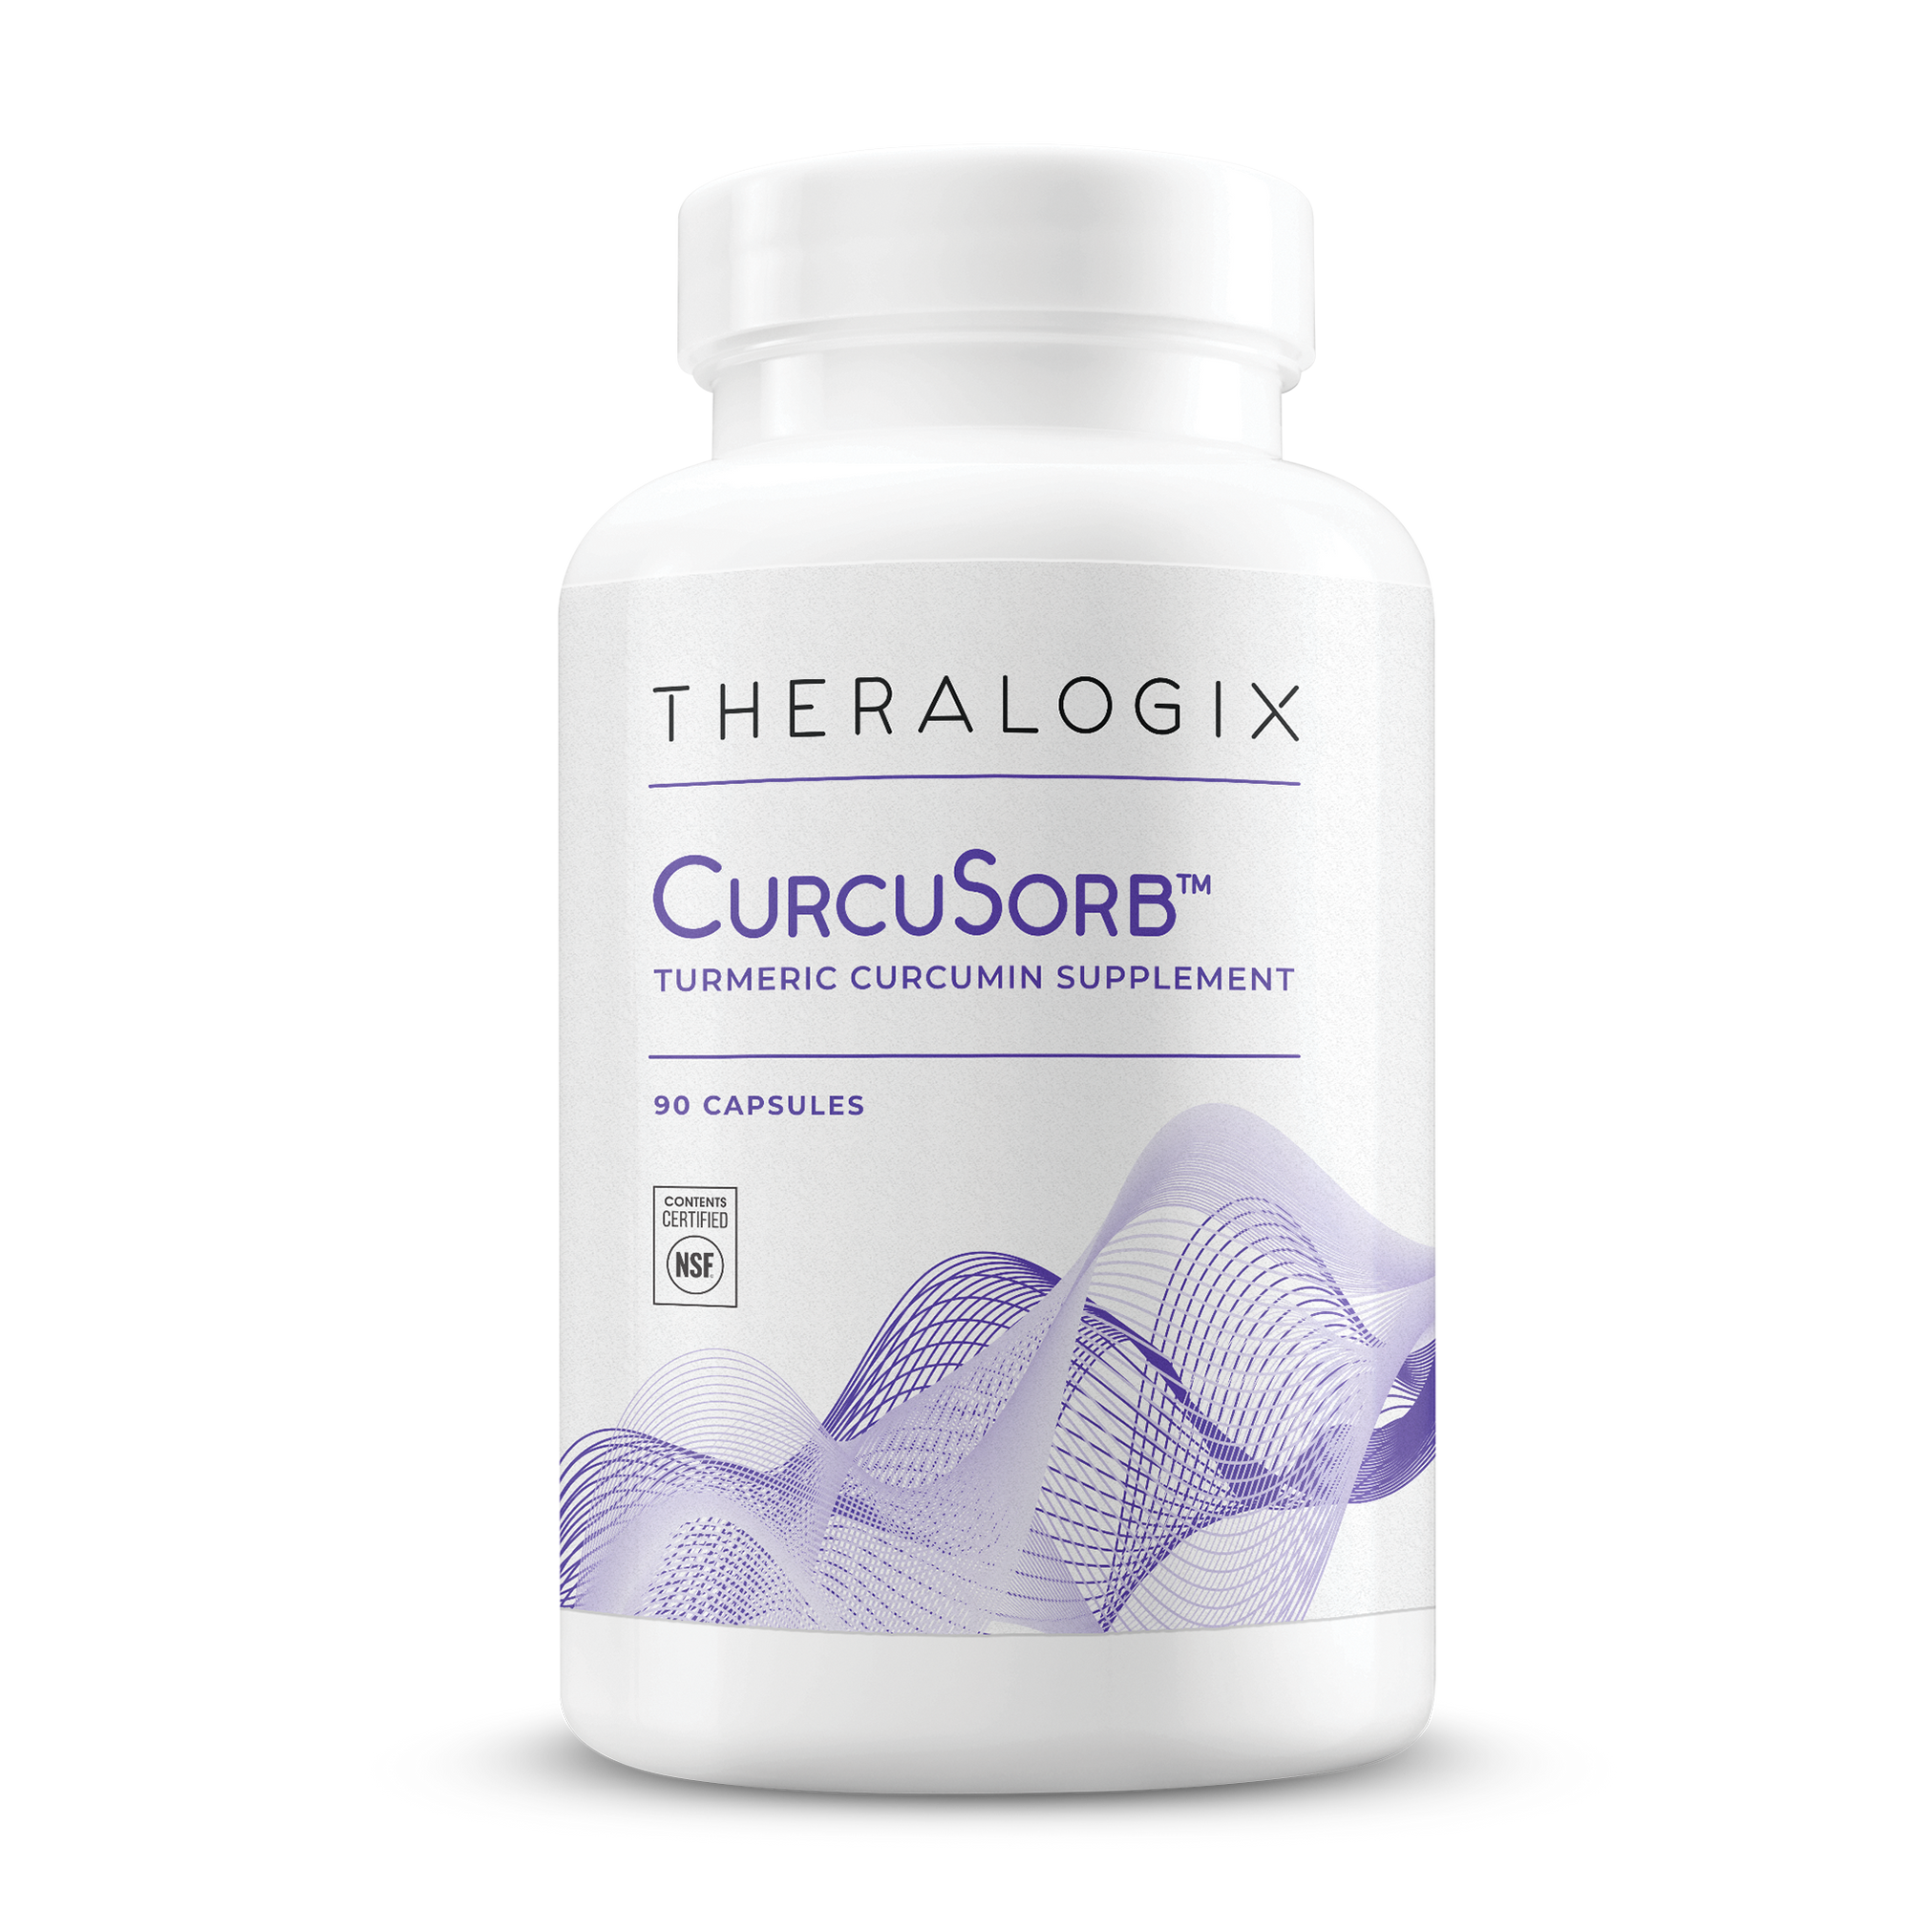 Curcusorb is an enhanced absorption turmeric curcumin supplement.